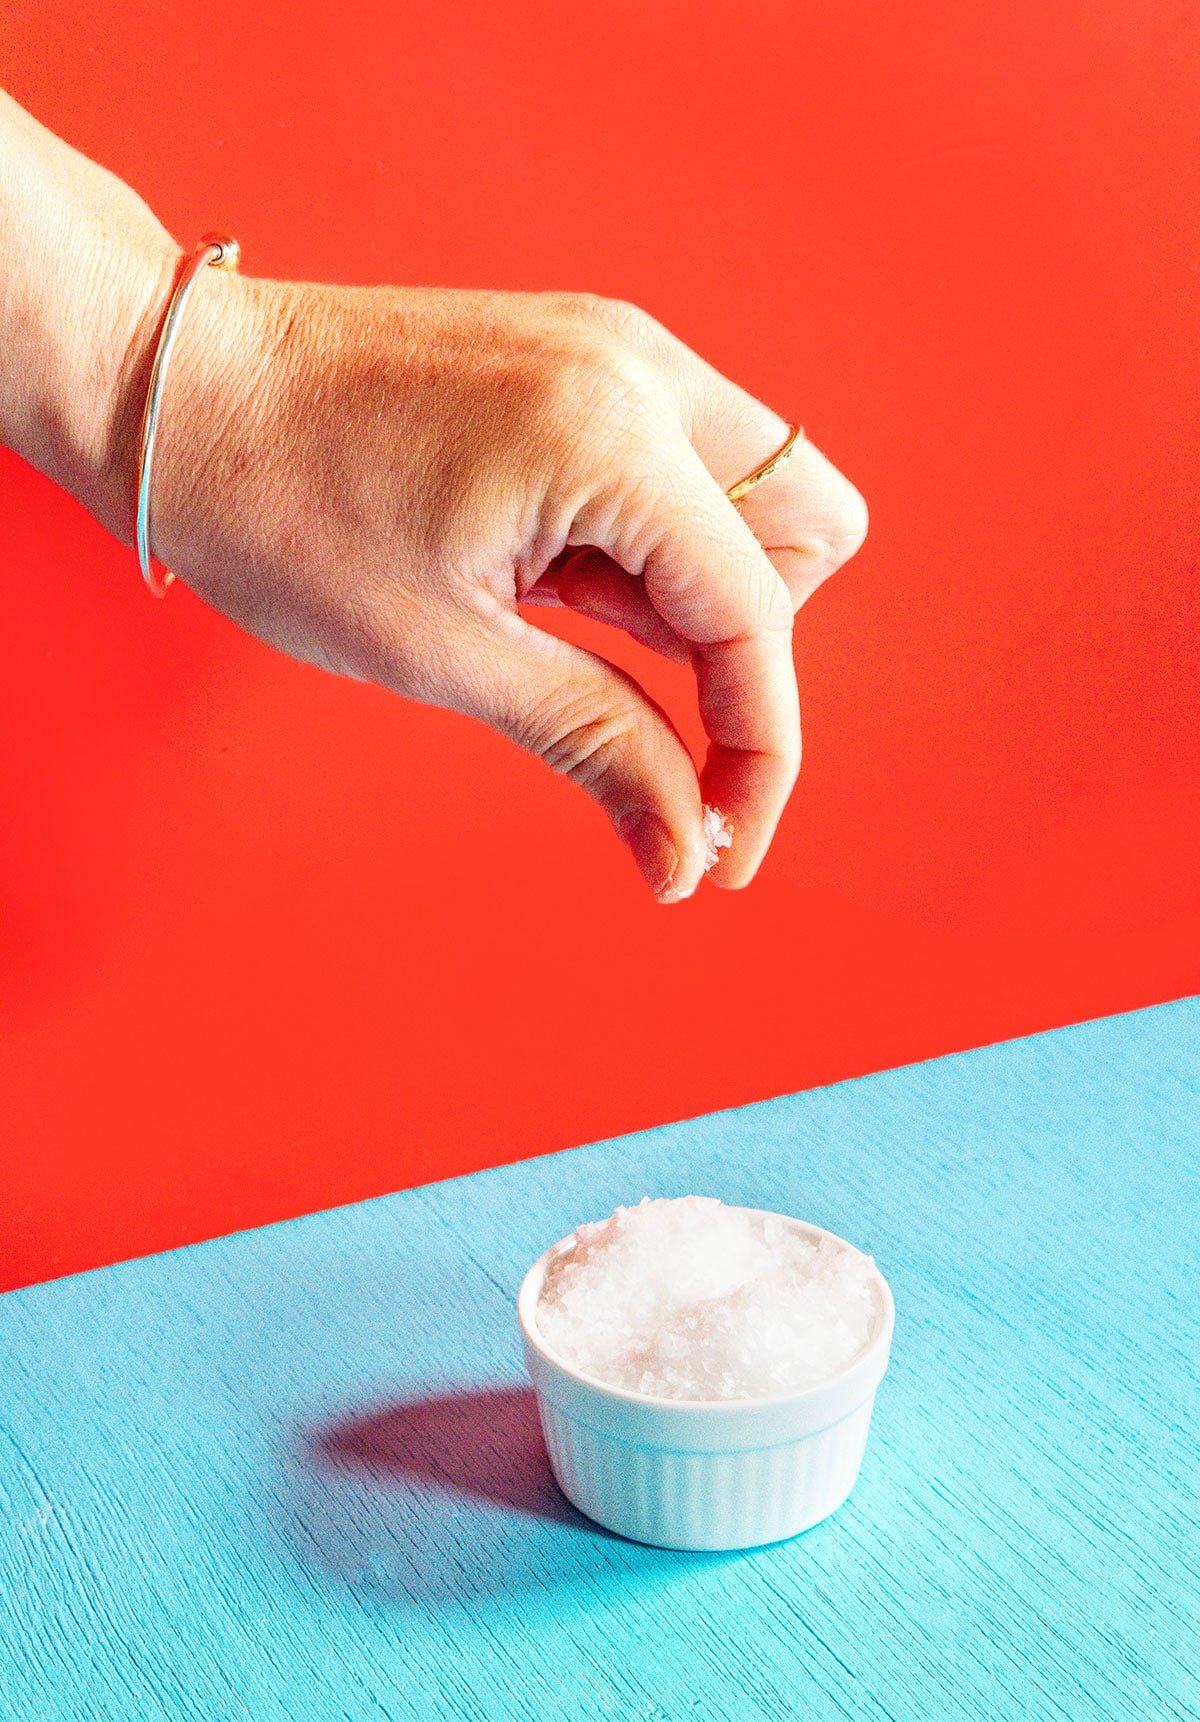 A photo of a hand holding a pinch of salt